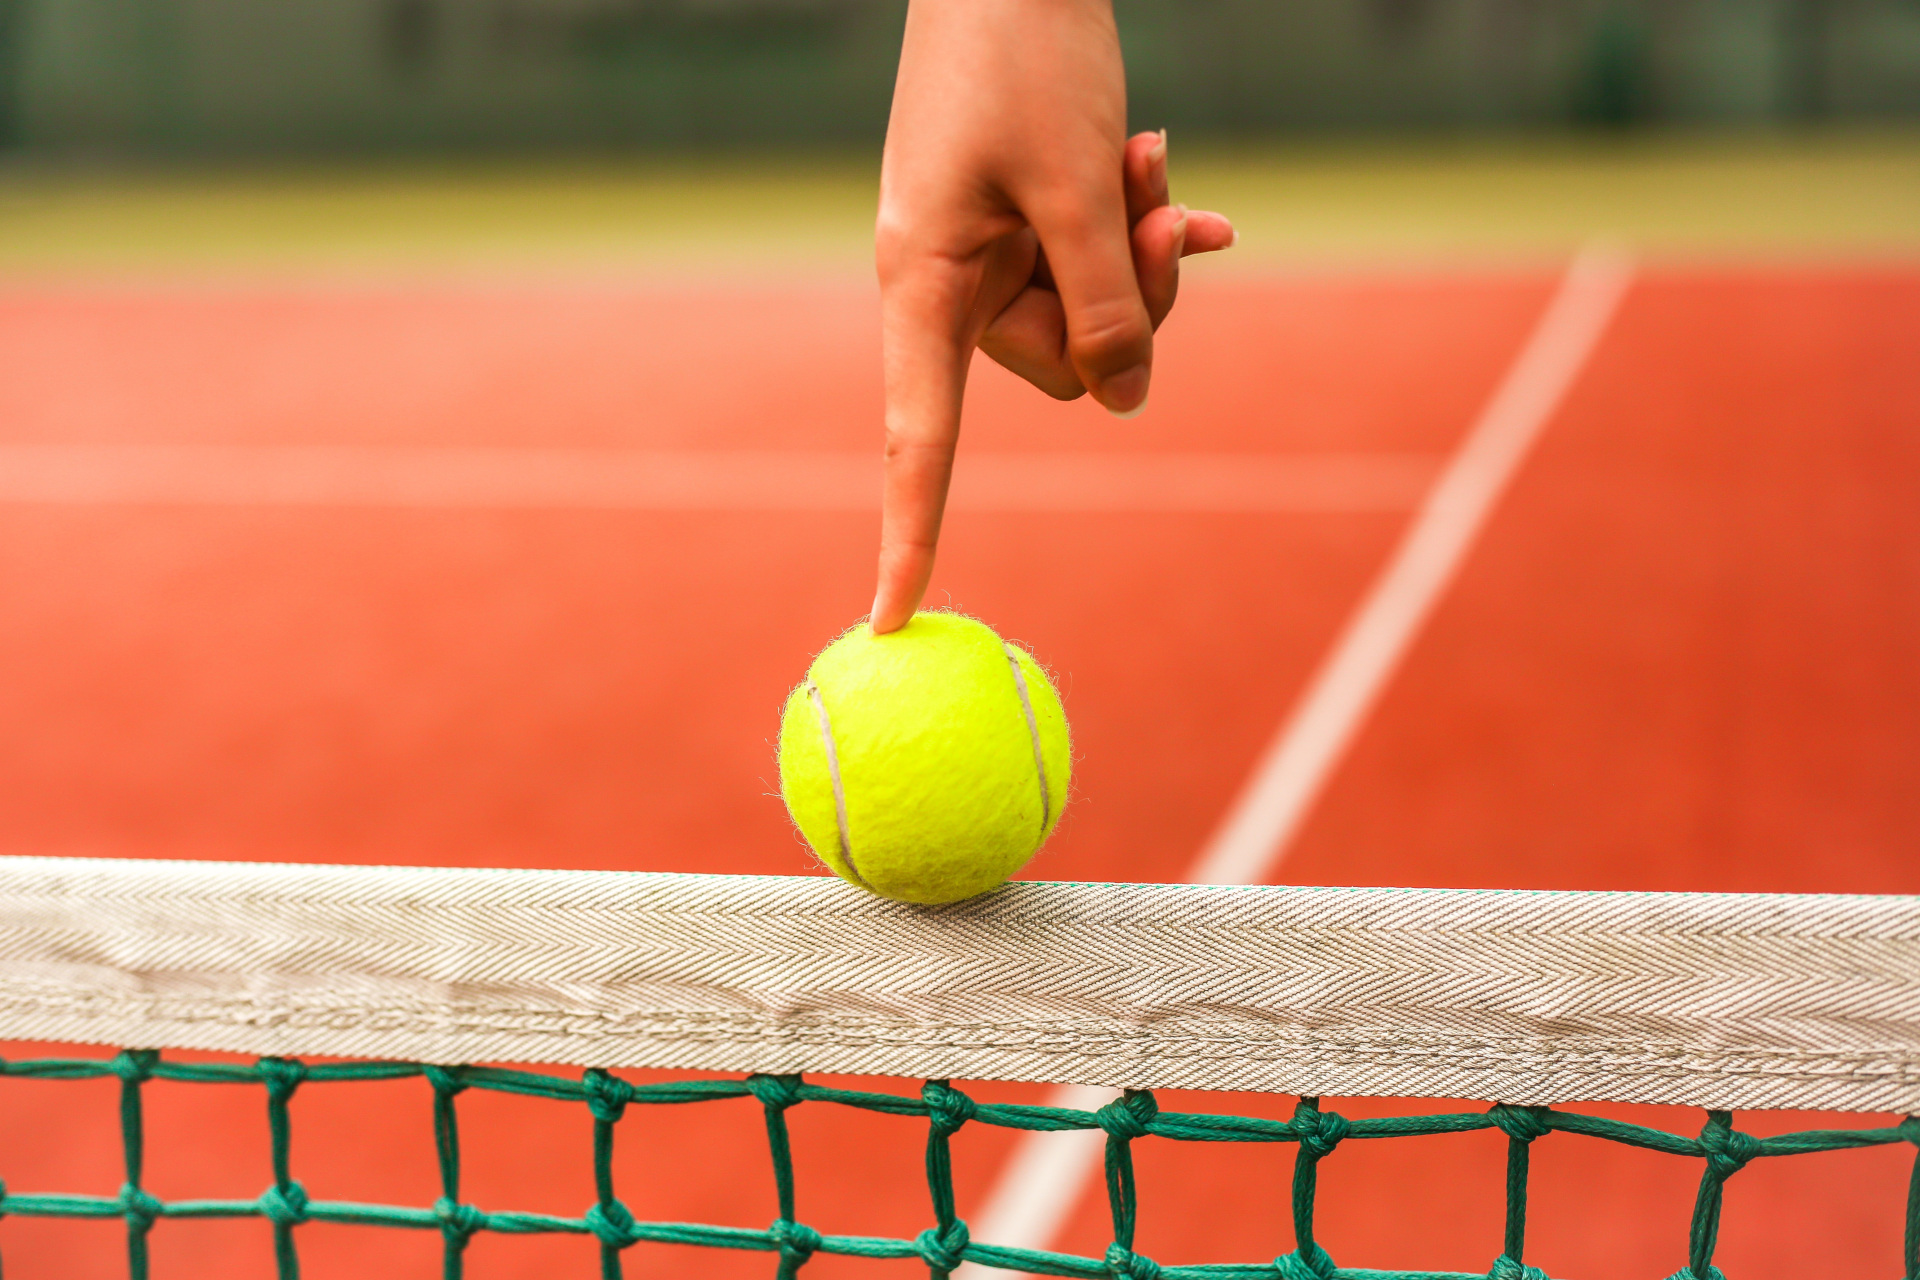 Hand balancing tennis ball on net